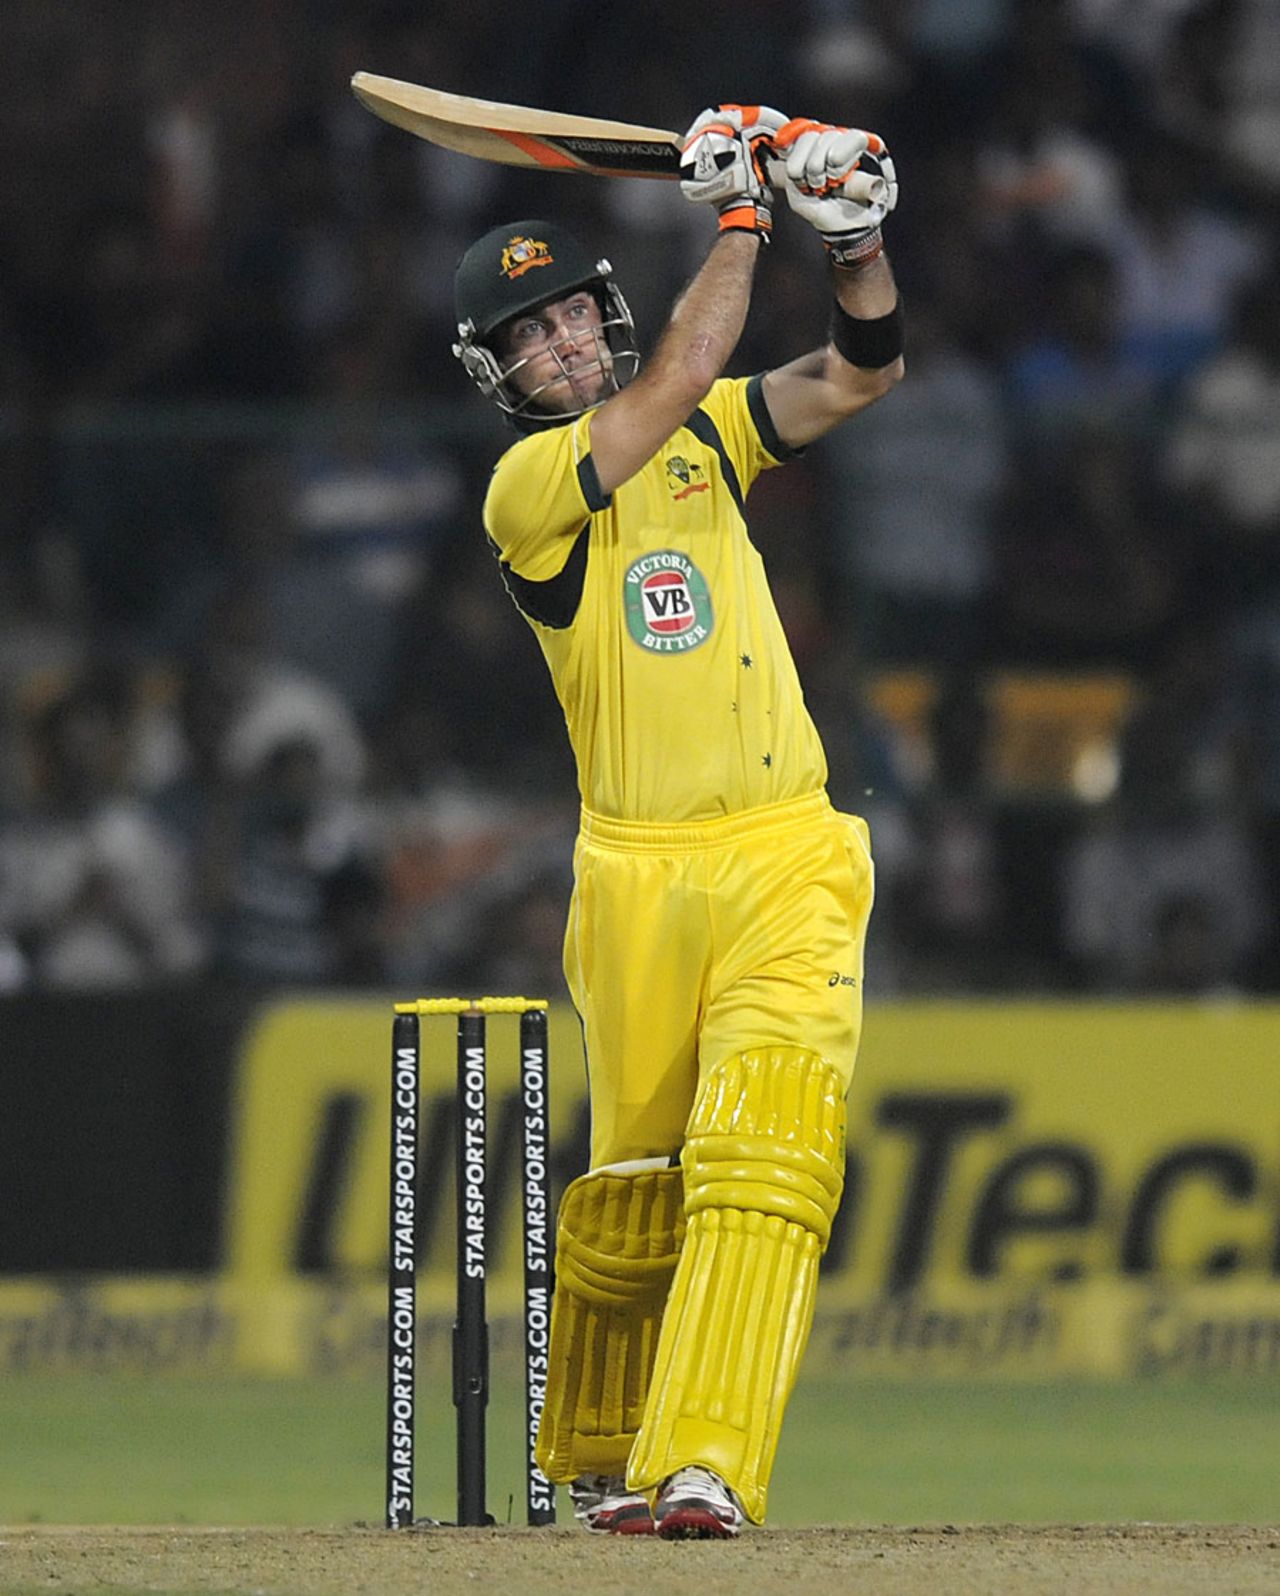 Glenn Maxwell goes over the top during his 60 off 22 balls, India v Australia, 7th ODI, Bangalore, November 2, 2013